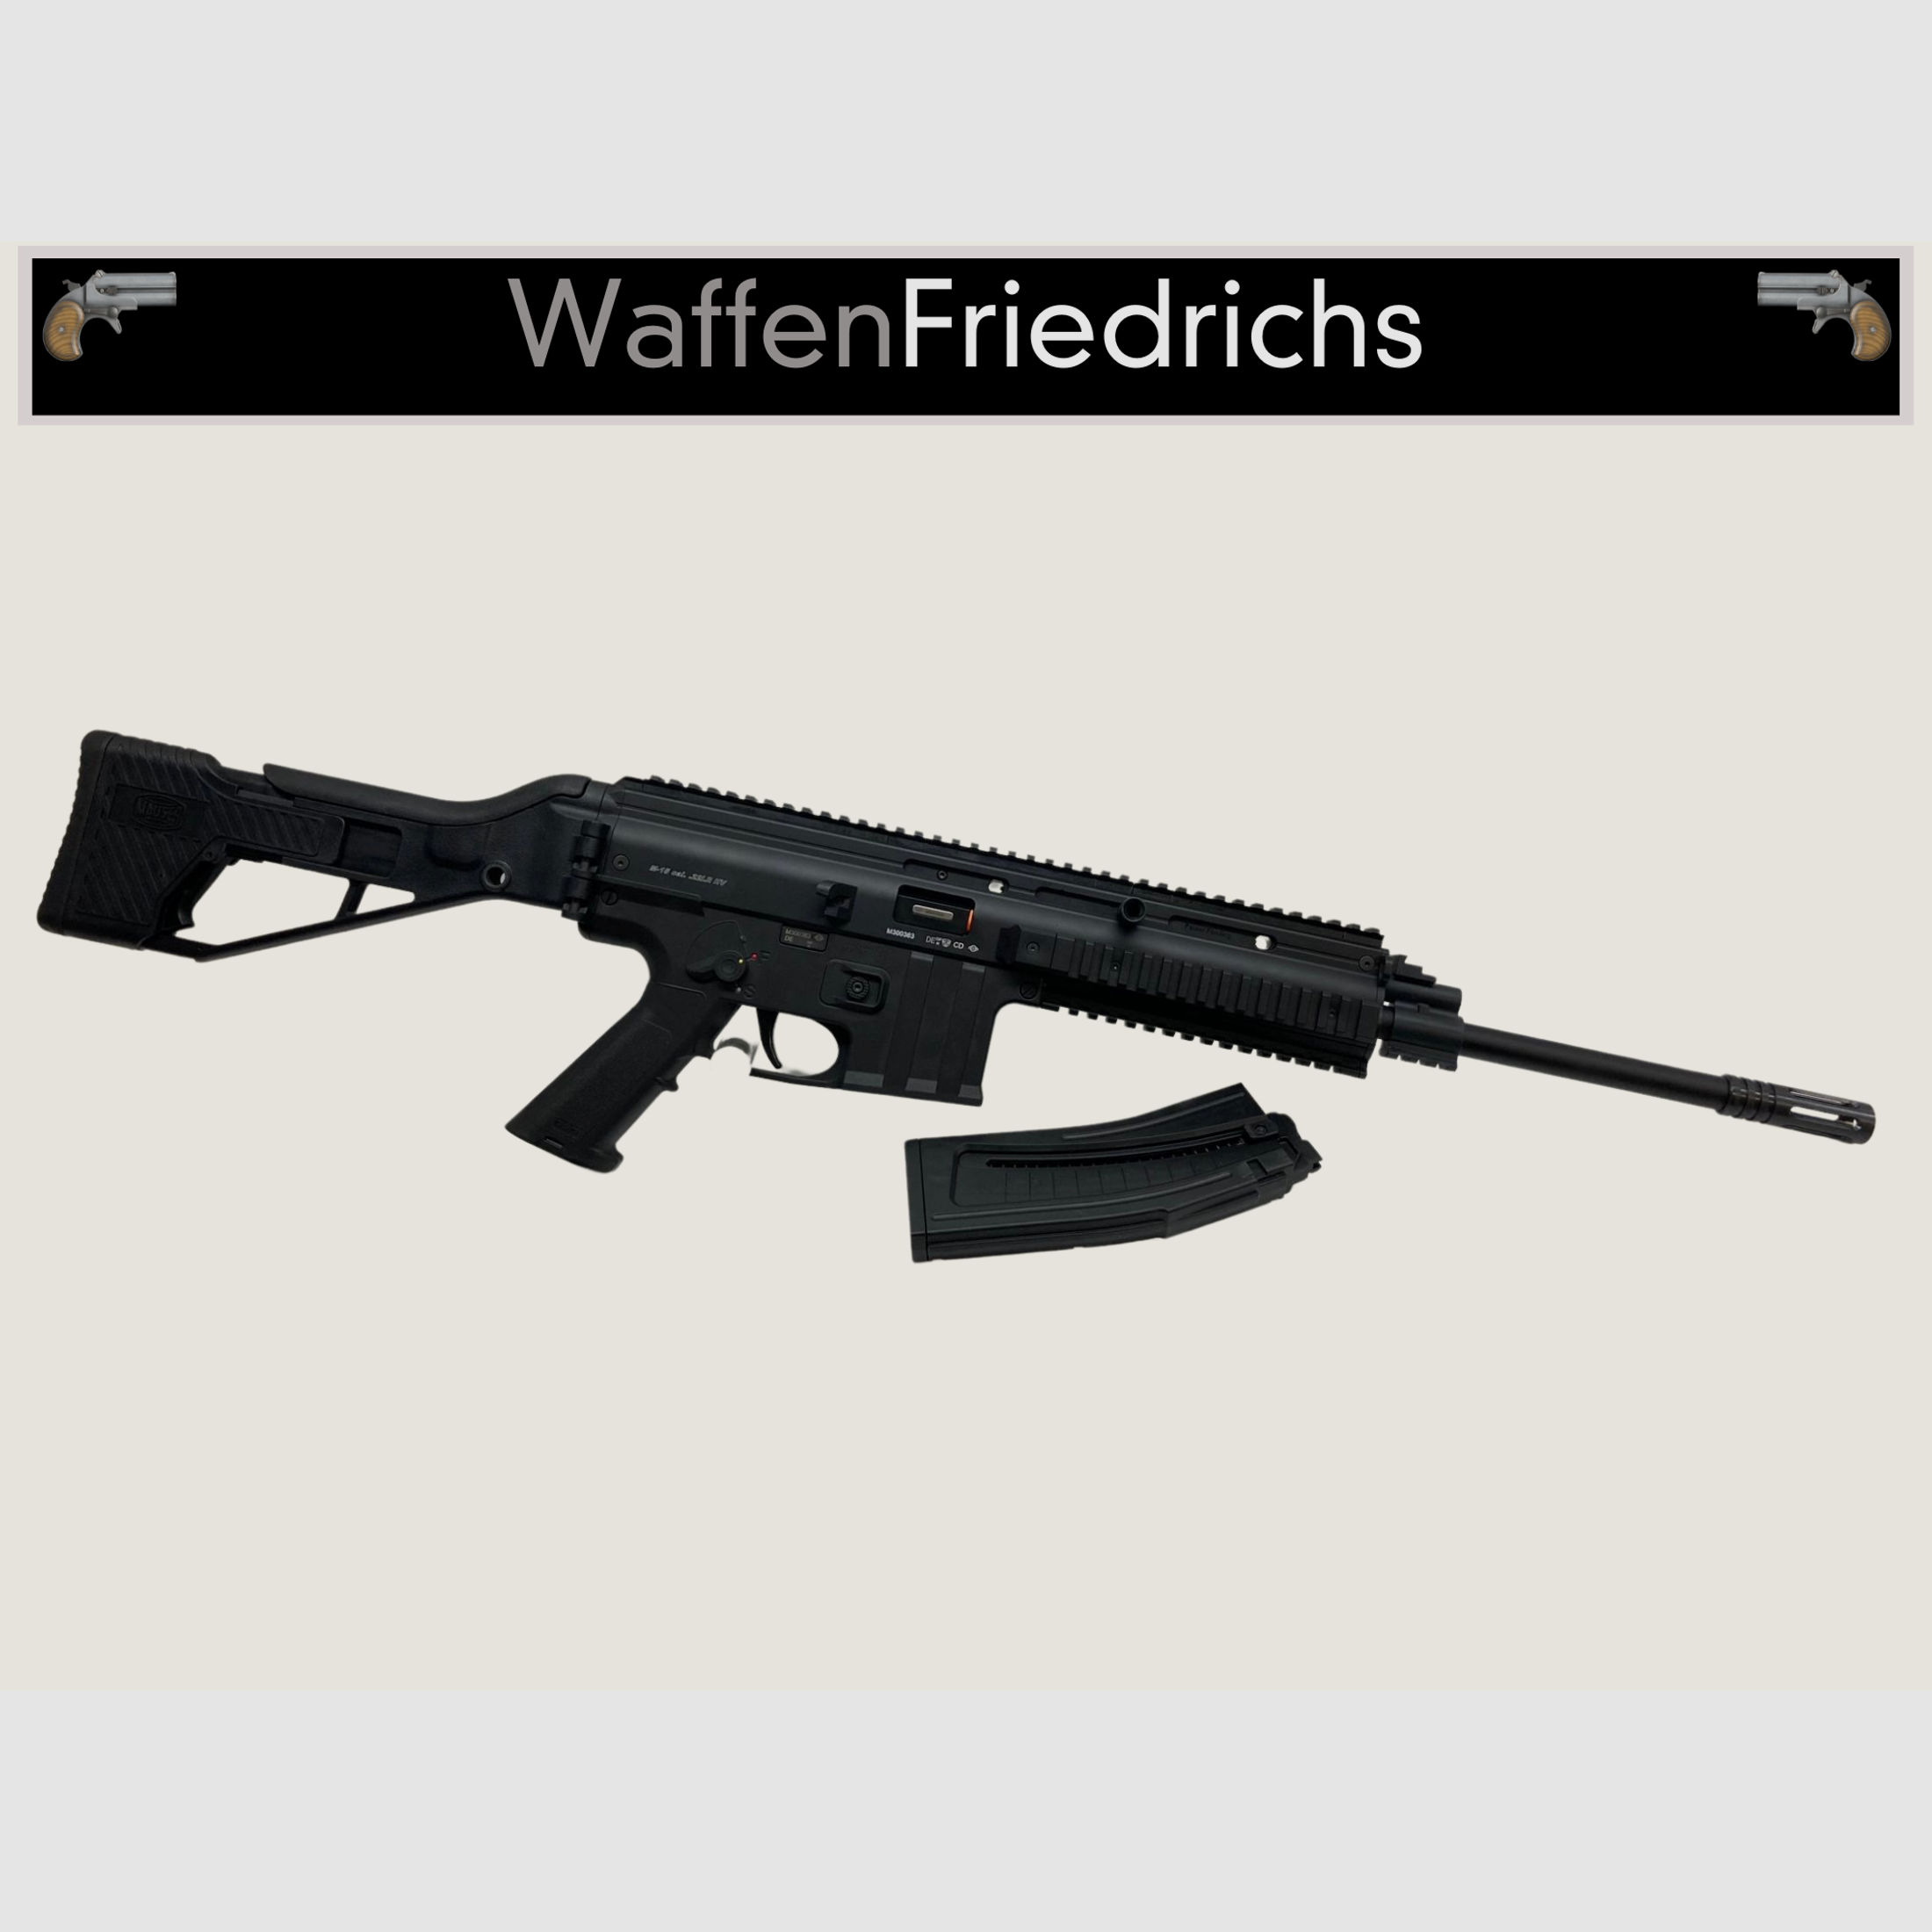 Mauser M15 - WaffenFriedrichs